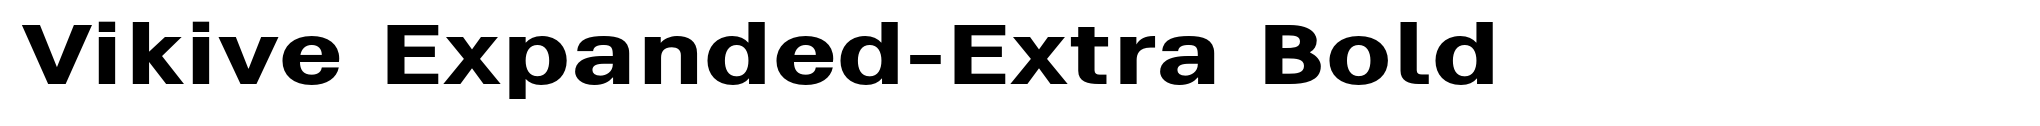 Vikive Expanded-Extra Bold image